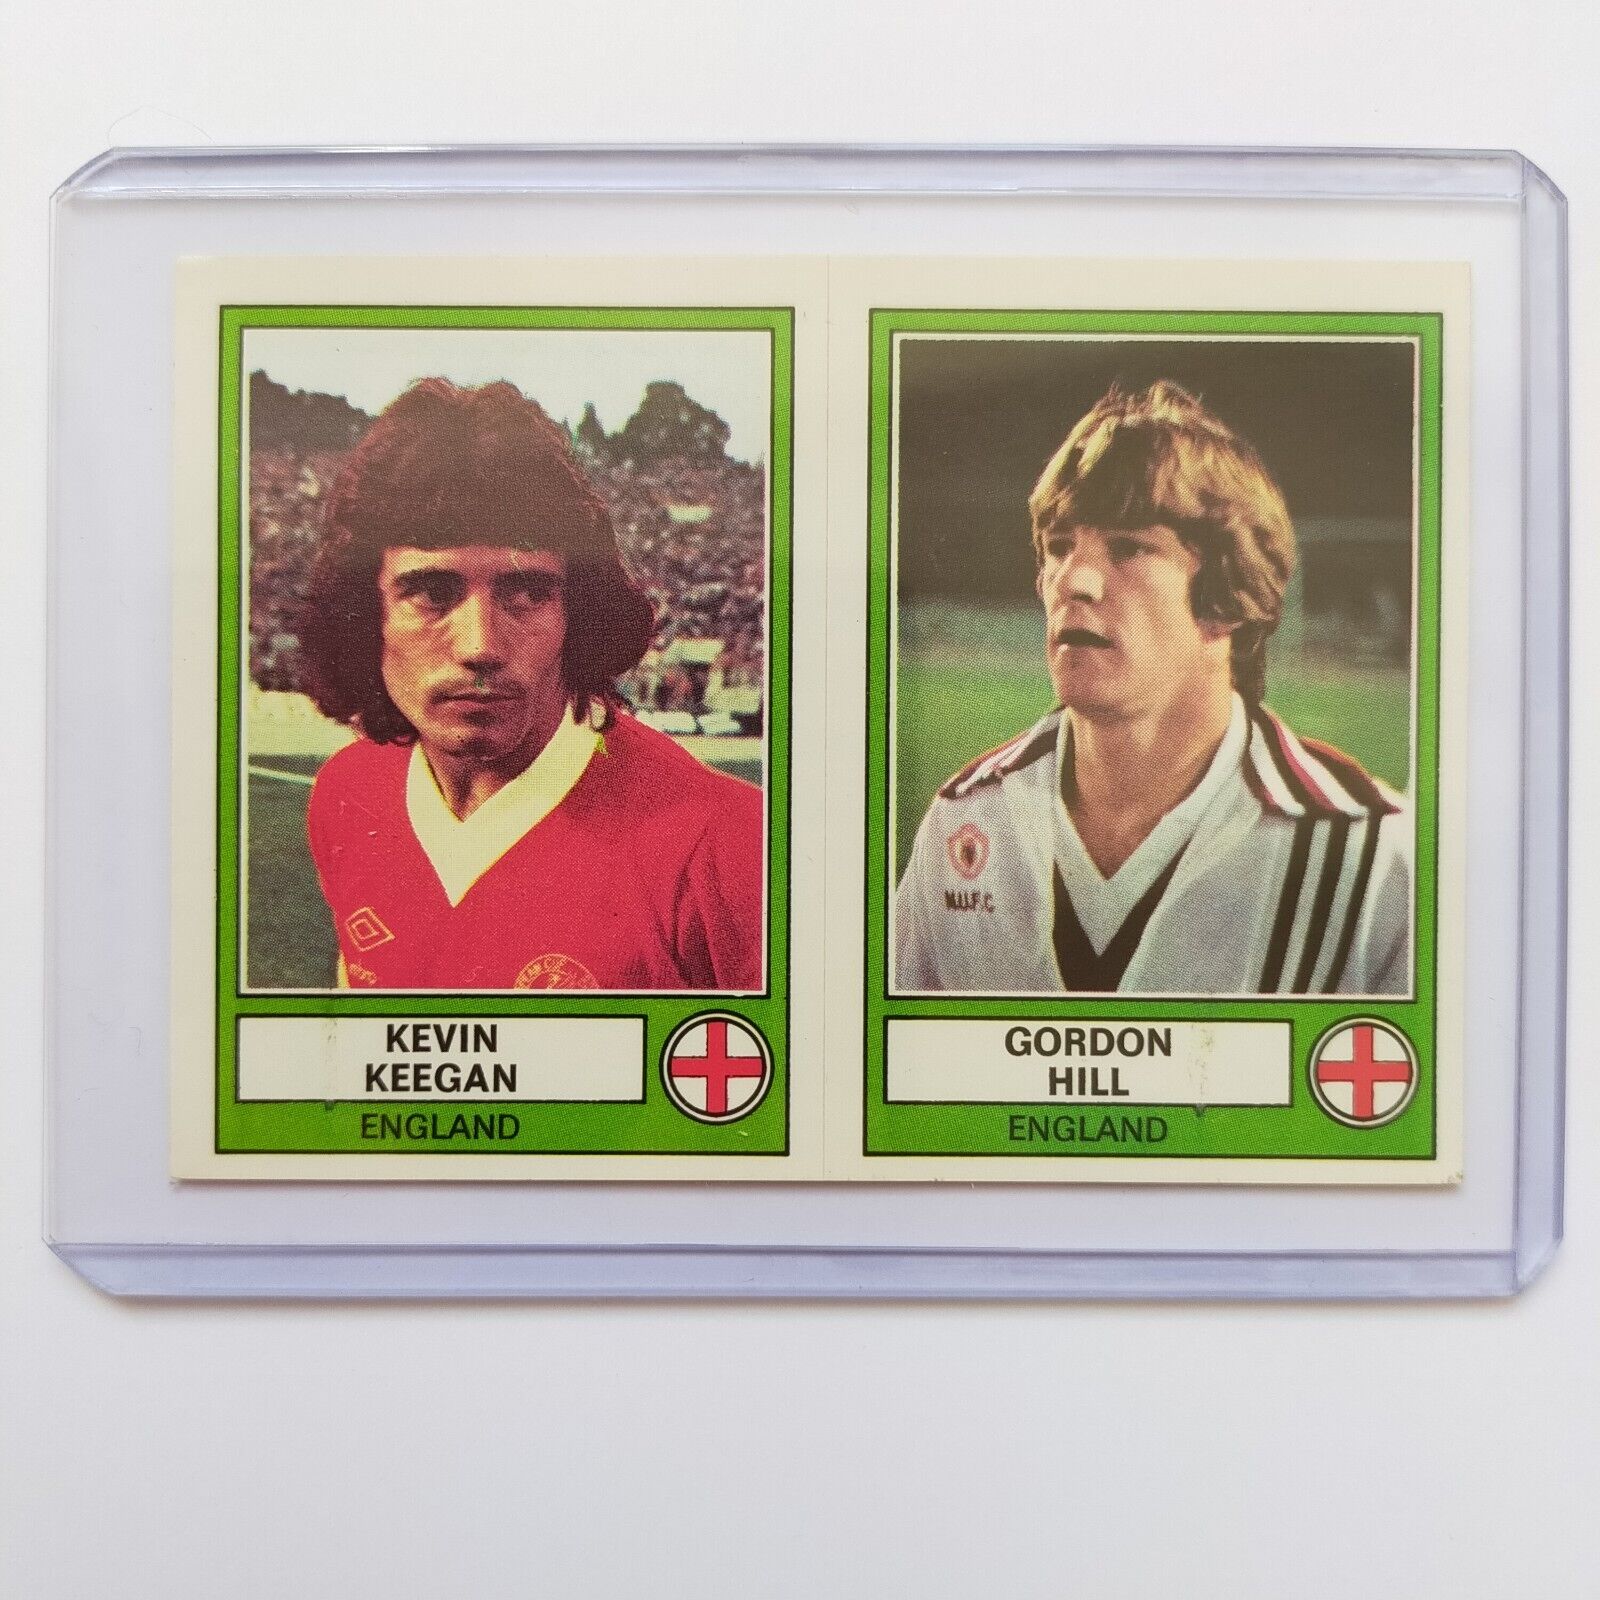 KEVIN KEEGAN 1978 GORDON HILL ENGLAND Panini Euro Football